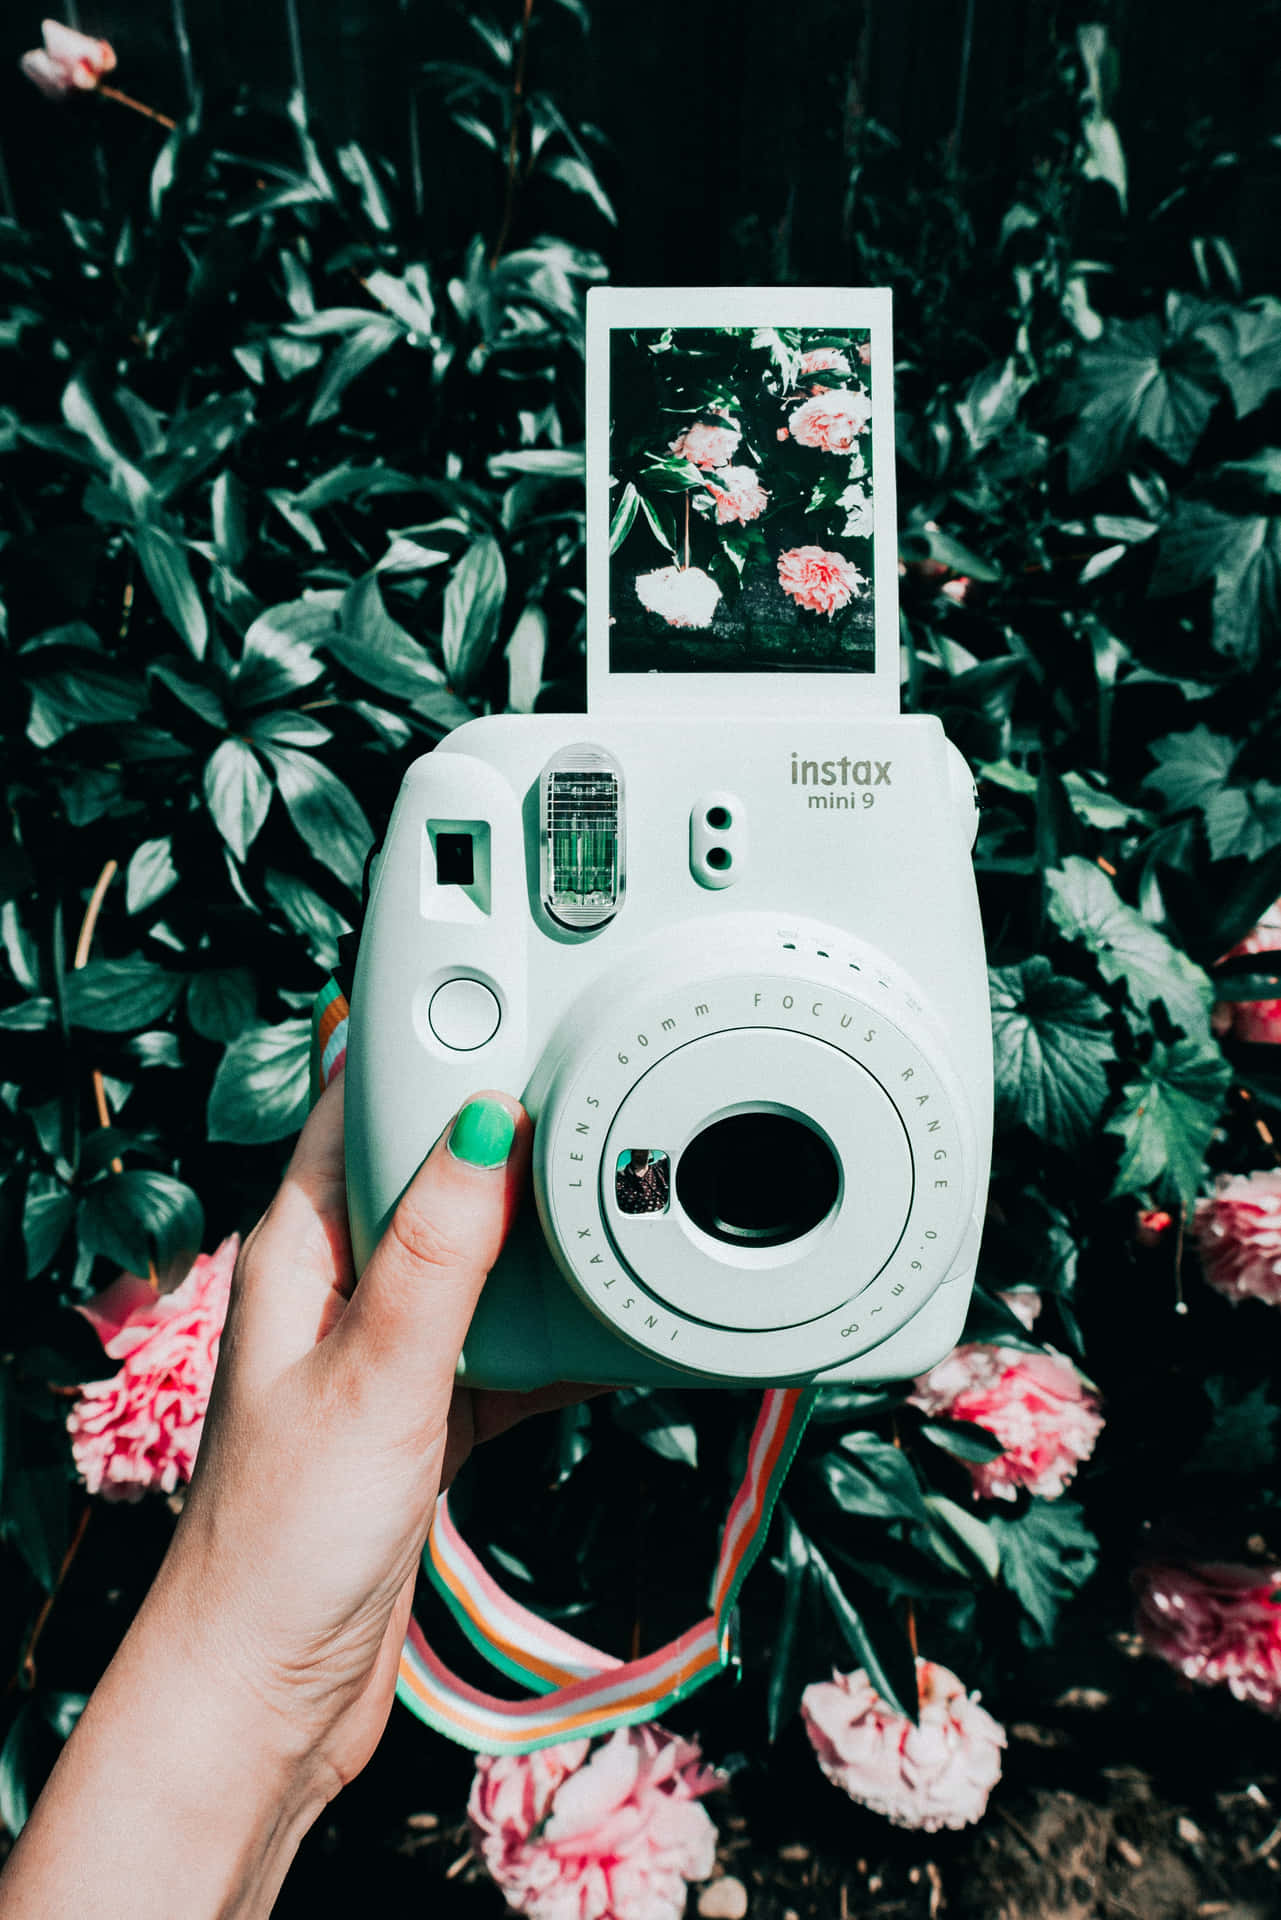 Instax Polaroid Camera In Garden Picture